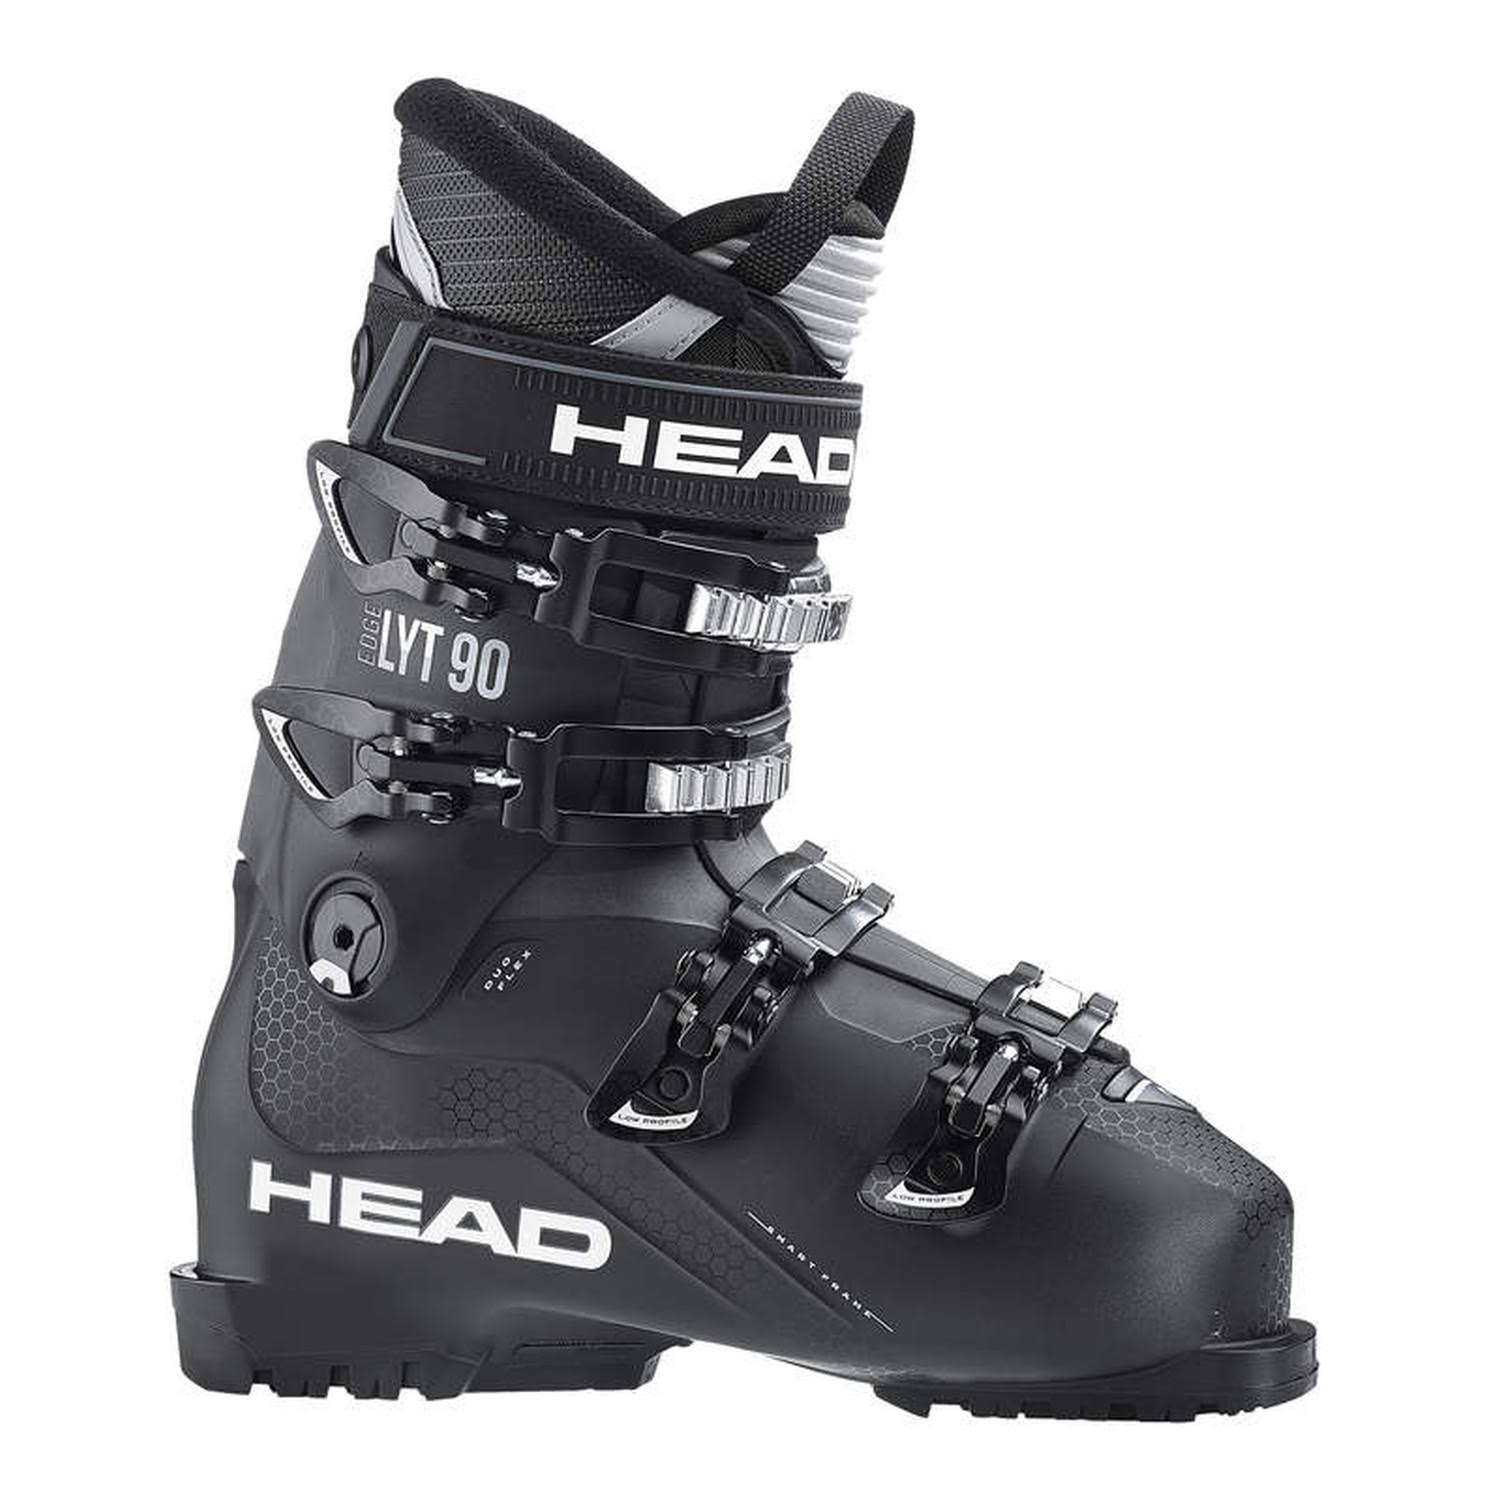 Head Edge LYT 90 Ski Boots